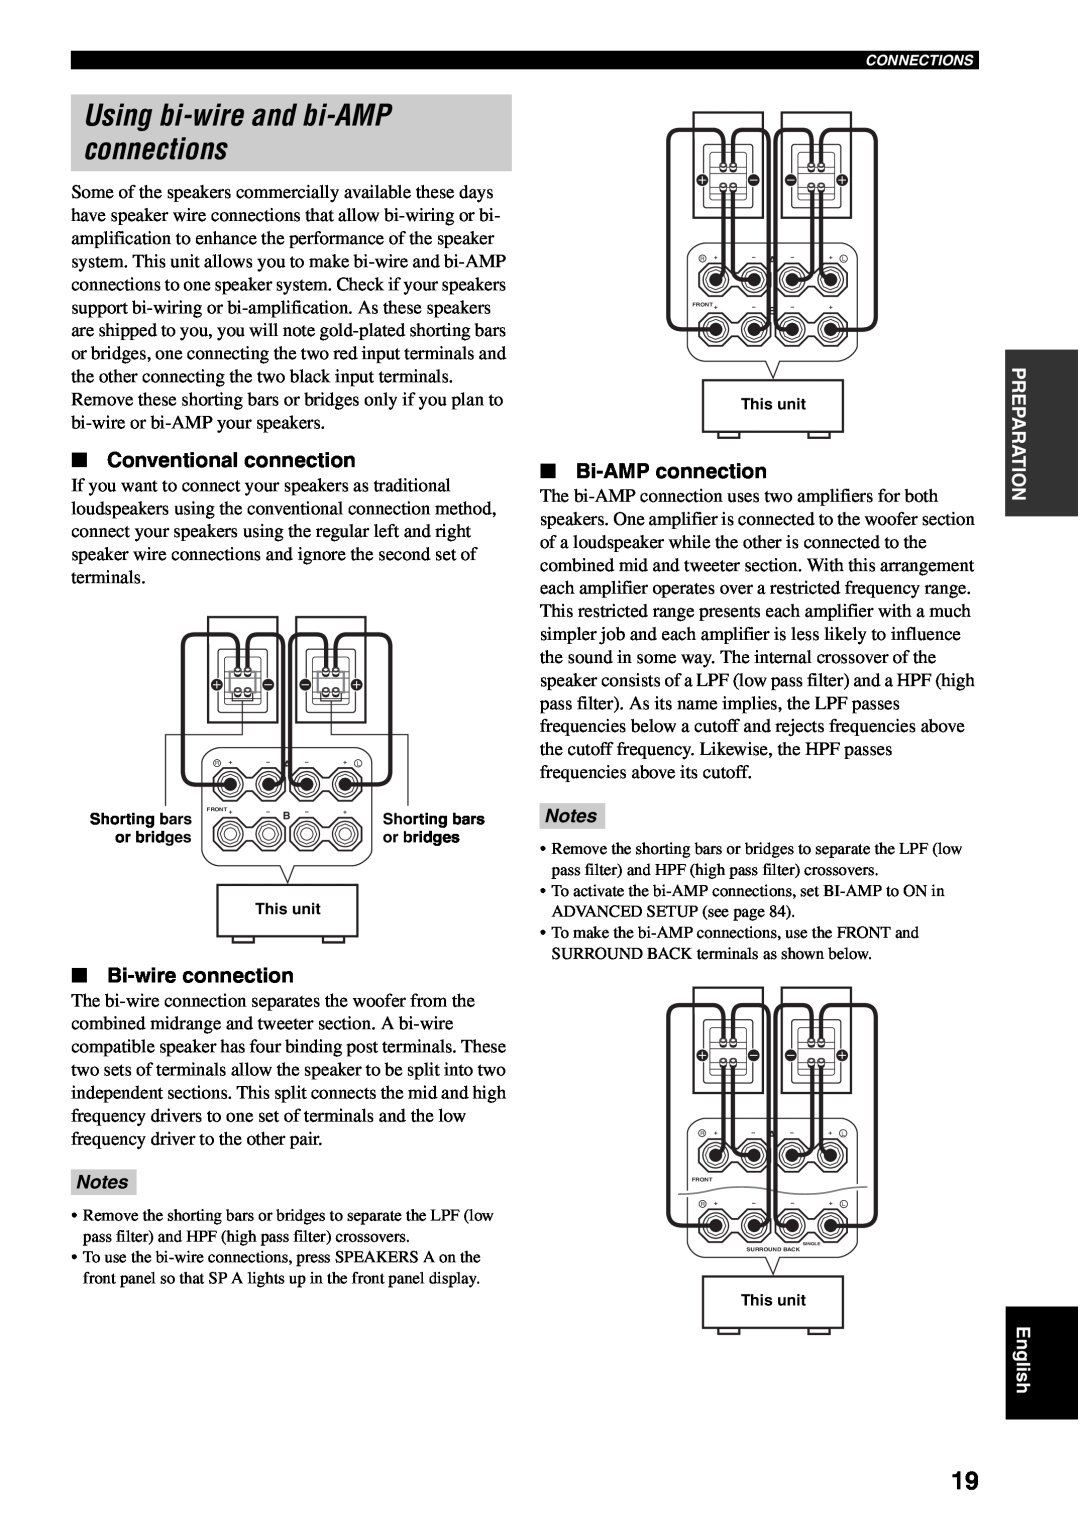 Yamaha RX-V1600 Using bi-wireand bi-AMPconnections, Conventional connection, Bi-wireconnection, Bi-AMPconnection, Notes 